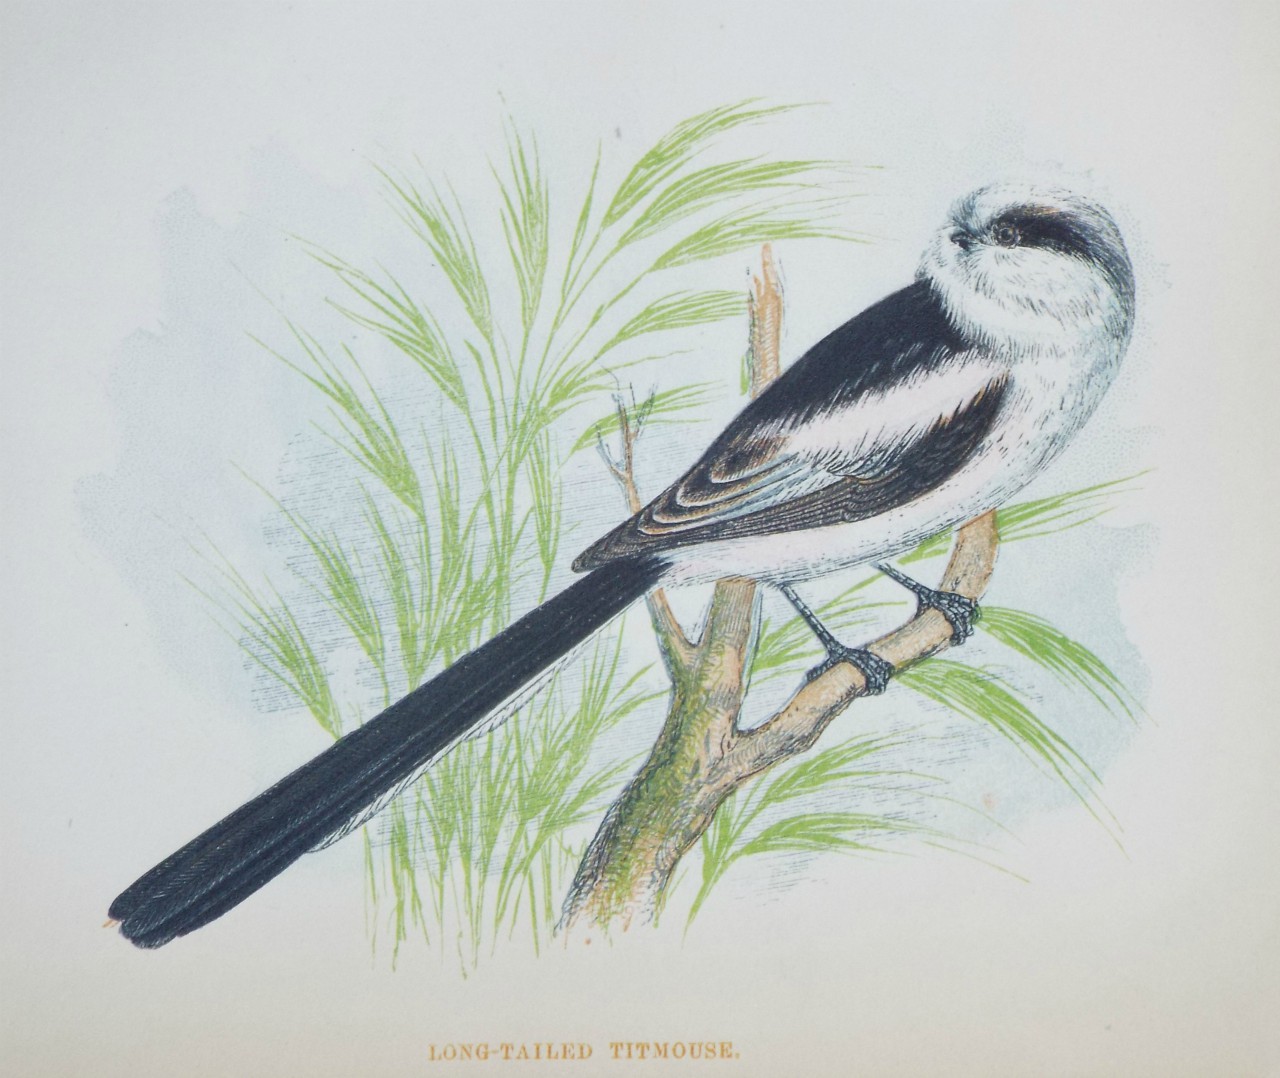 Chromo-lithograph - Long-tailed Titmouse.